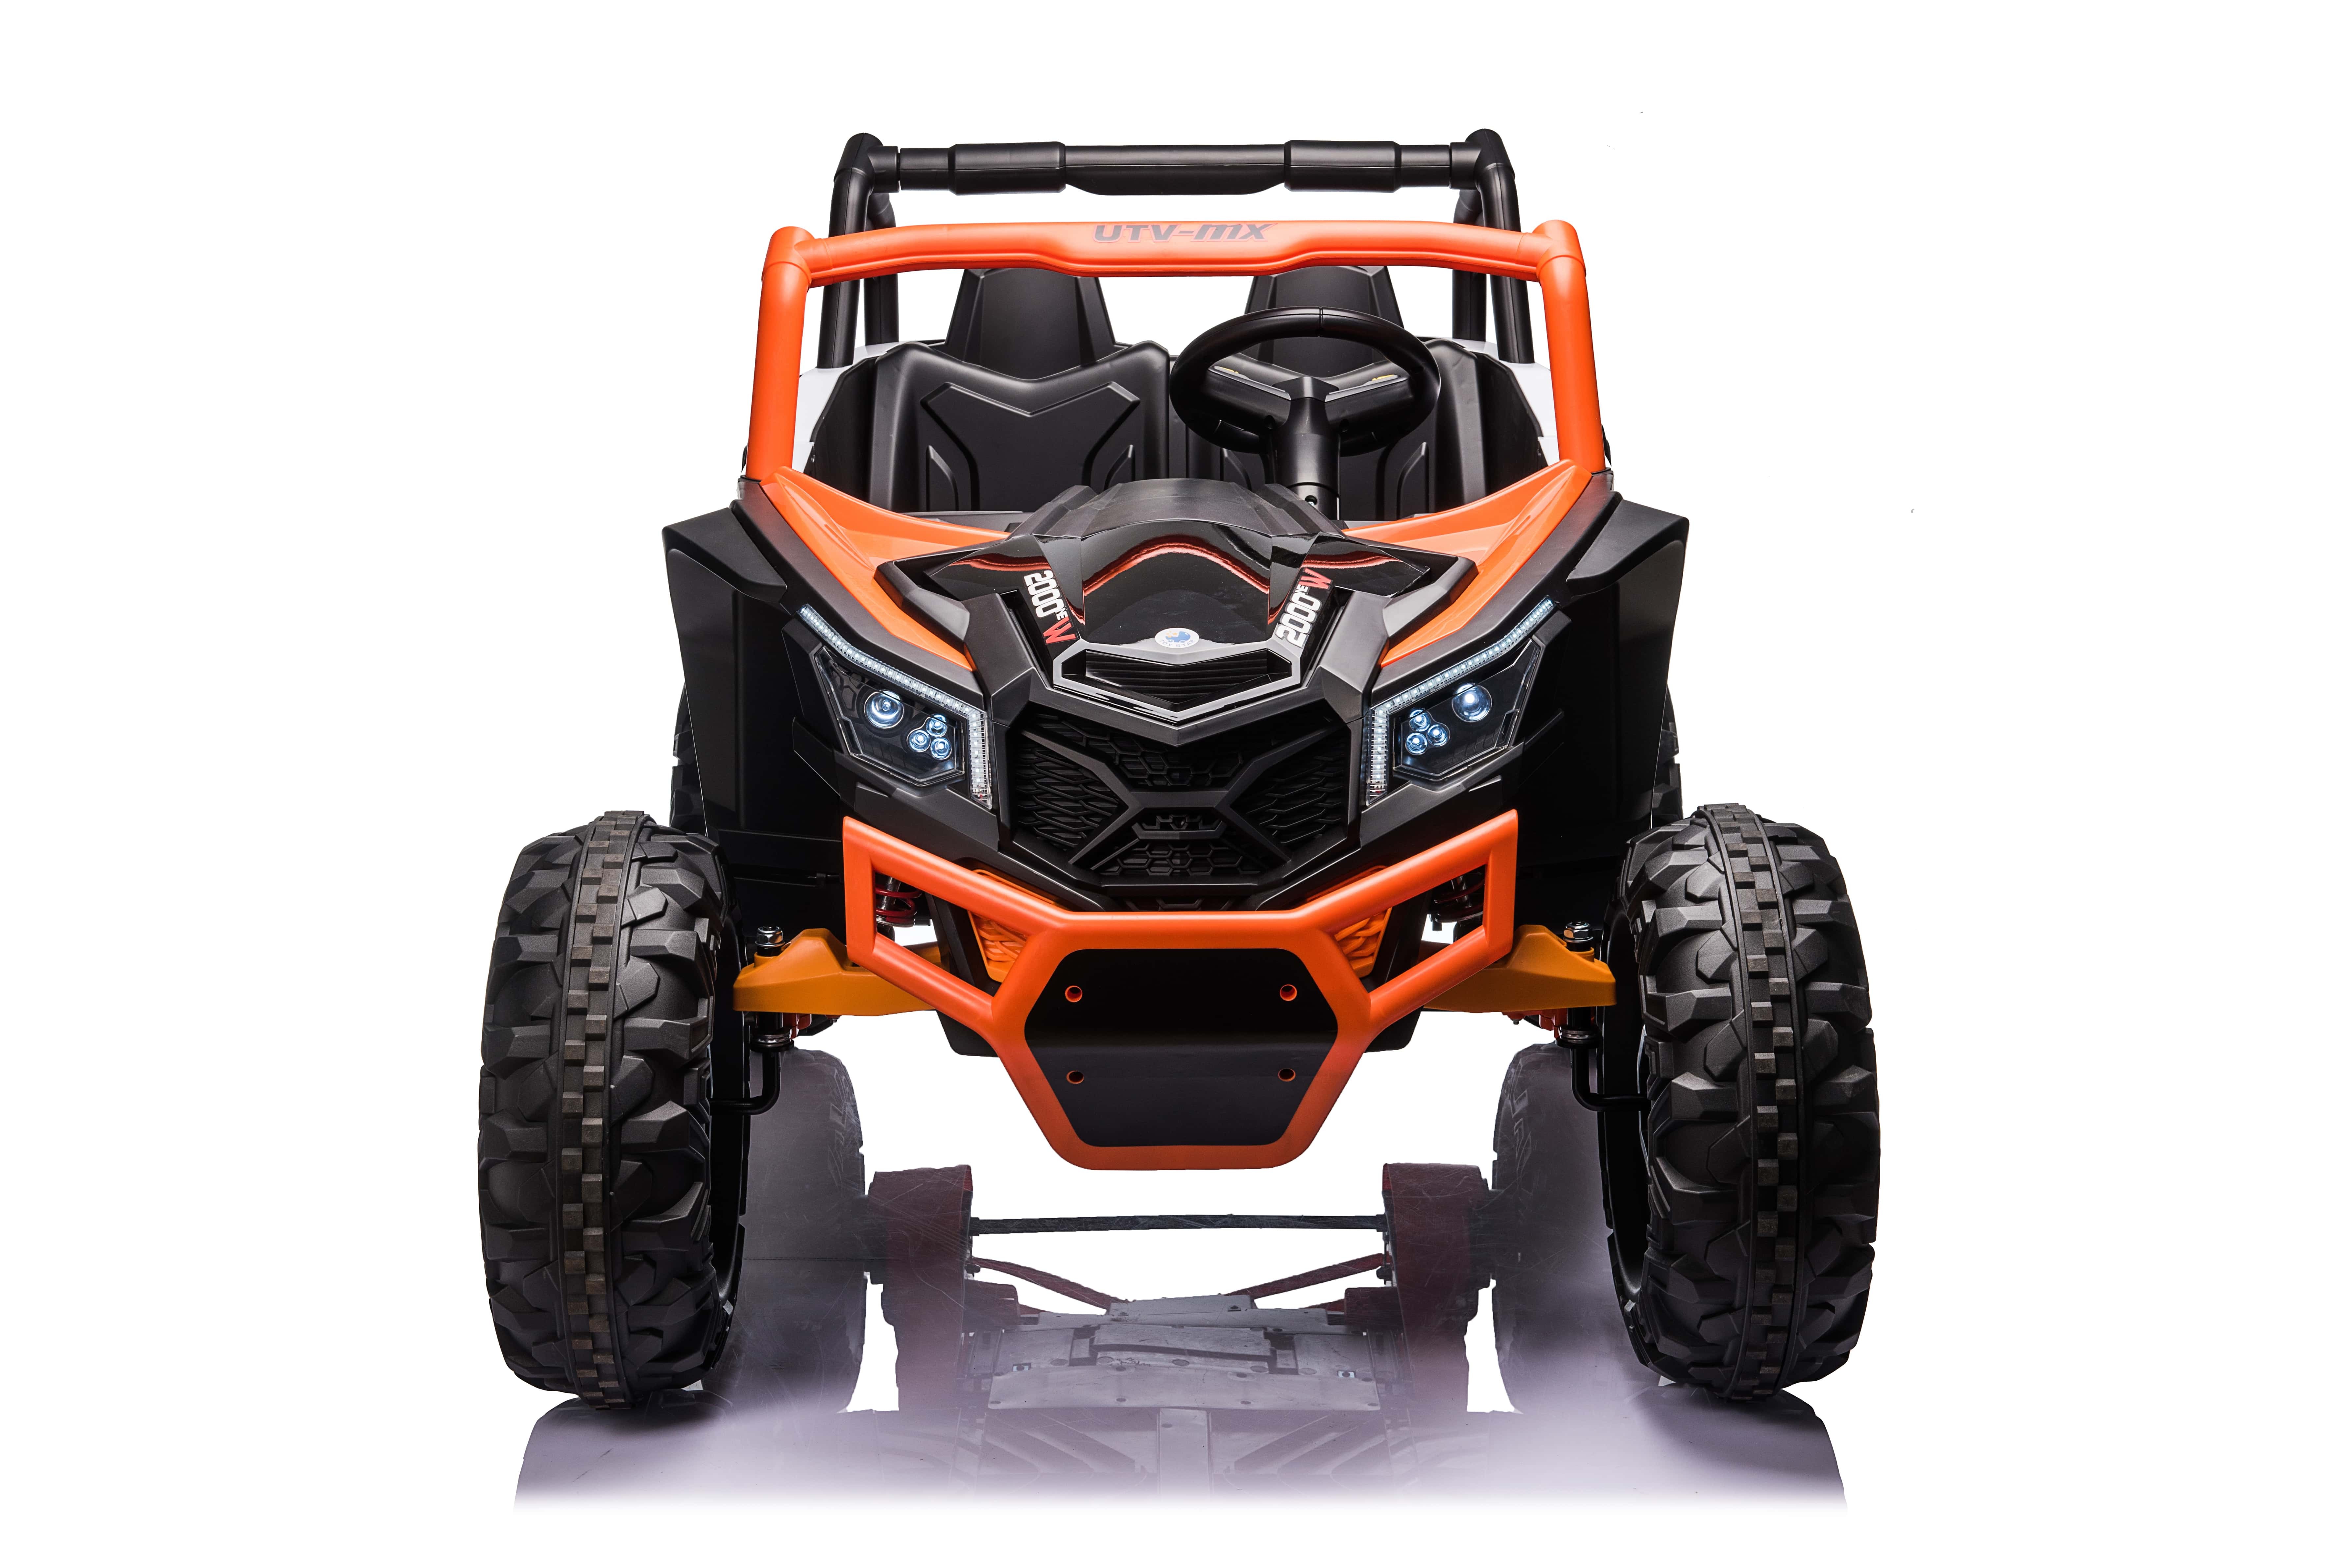 613 Orange and black ATV